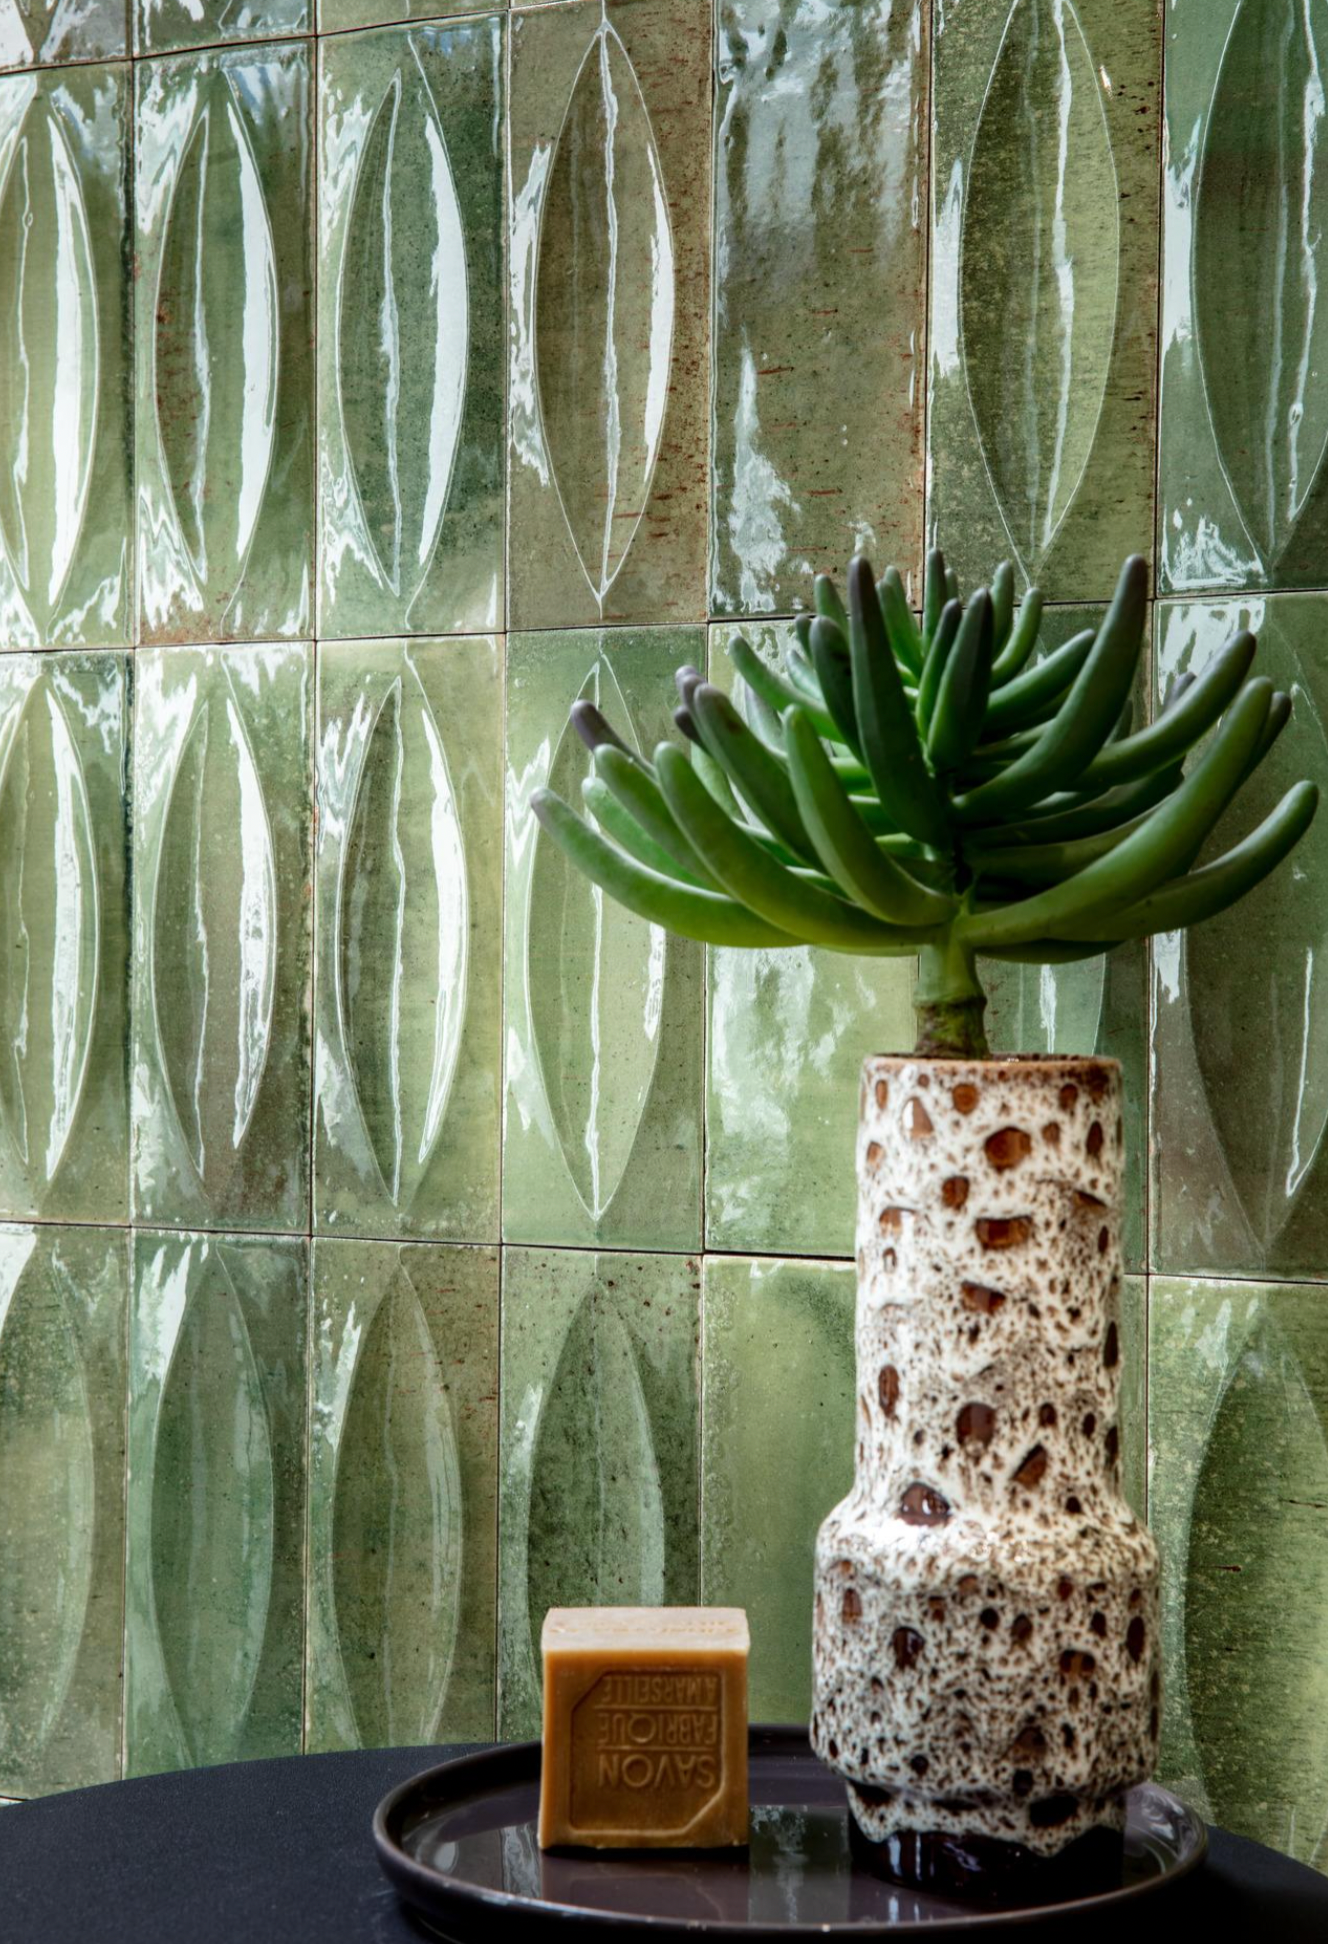 Surf 3x8 Giada Green Deco Gloss Porcelain Tile - Samples